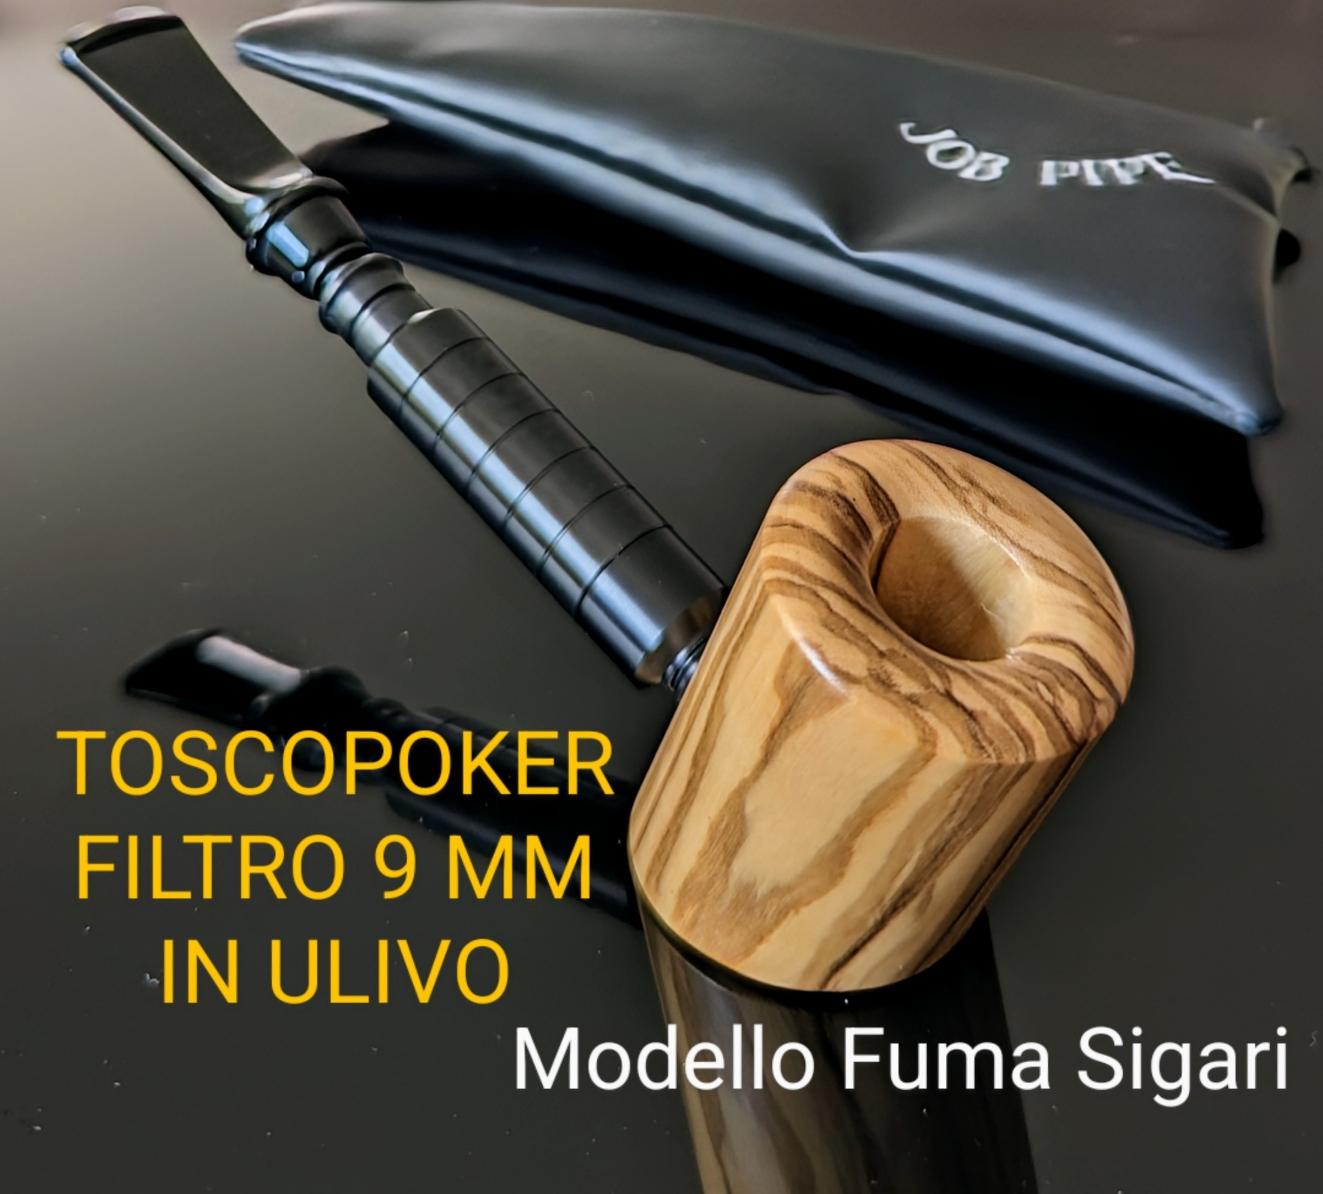 Job Pipe Toscopoker in Ulivo Filtro 9 mm (pipa per sigari)